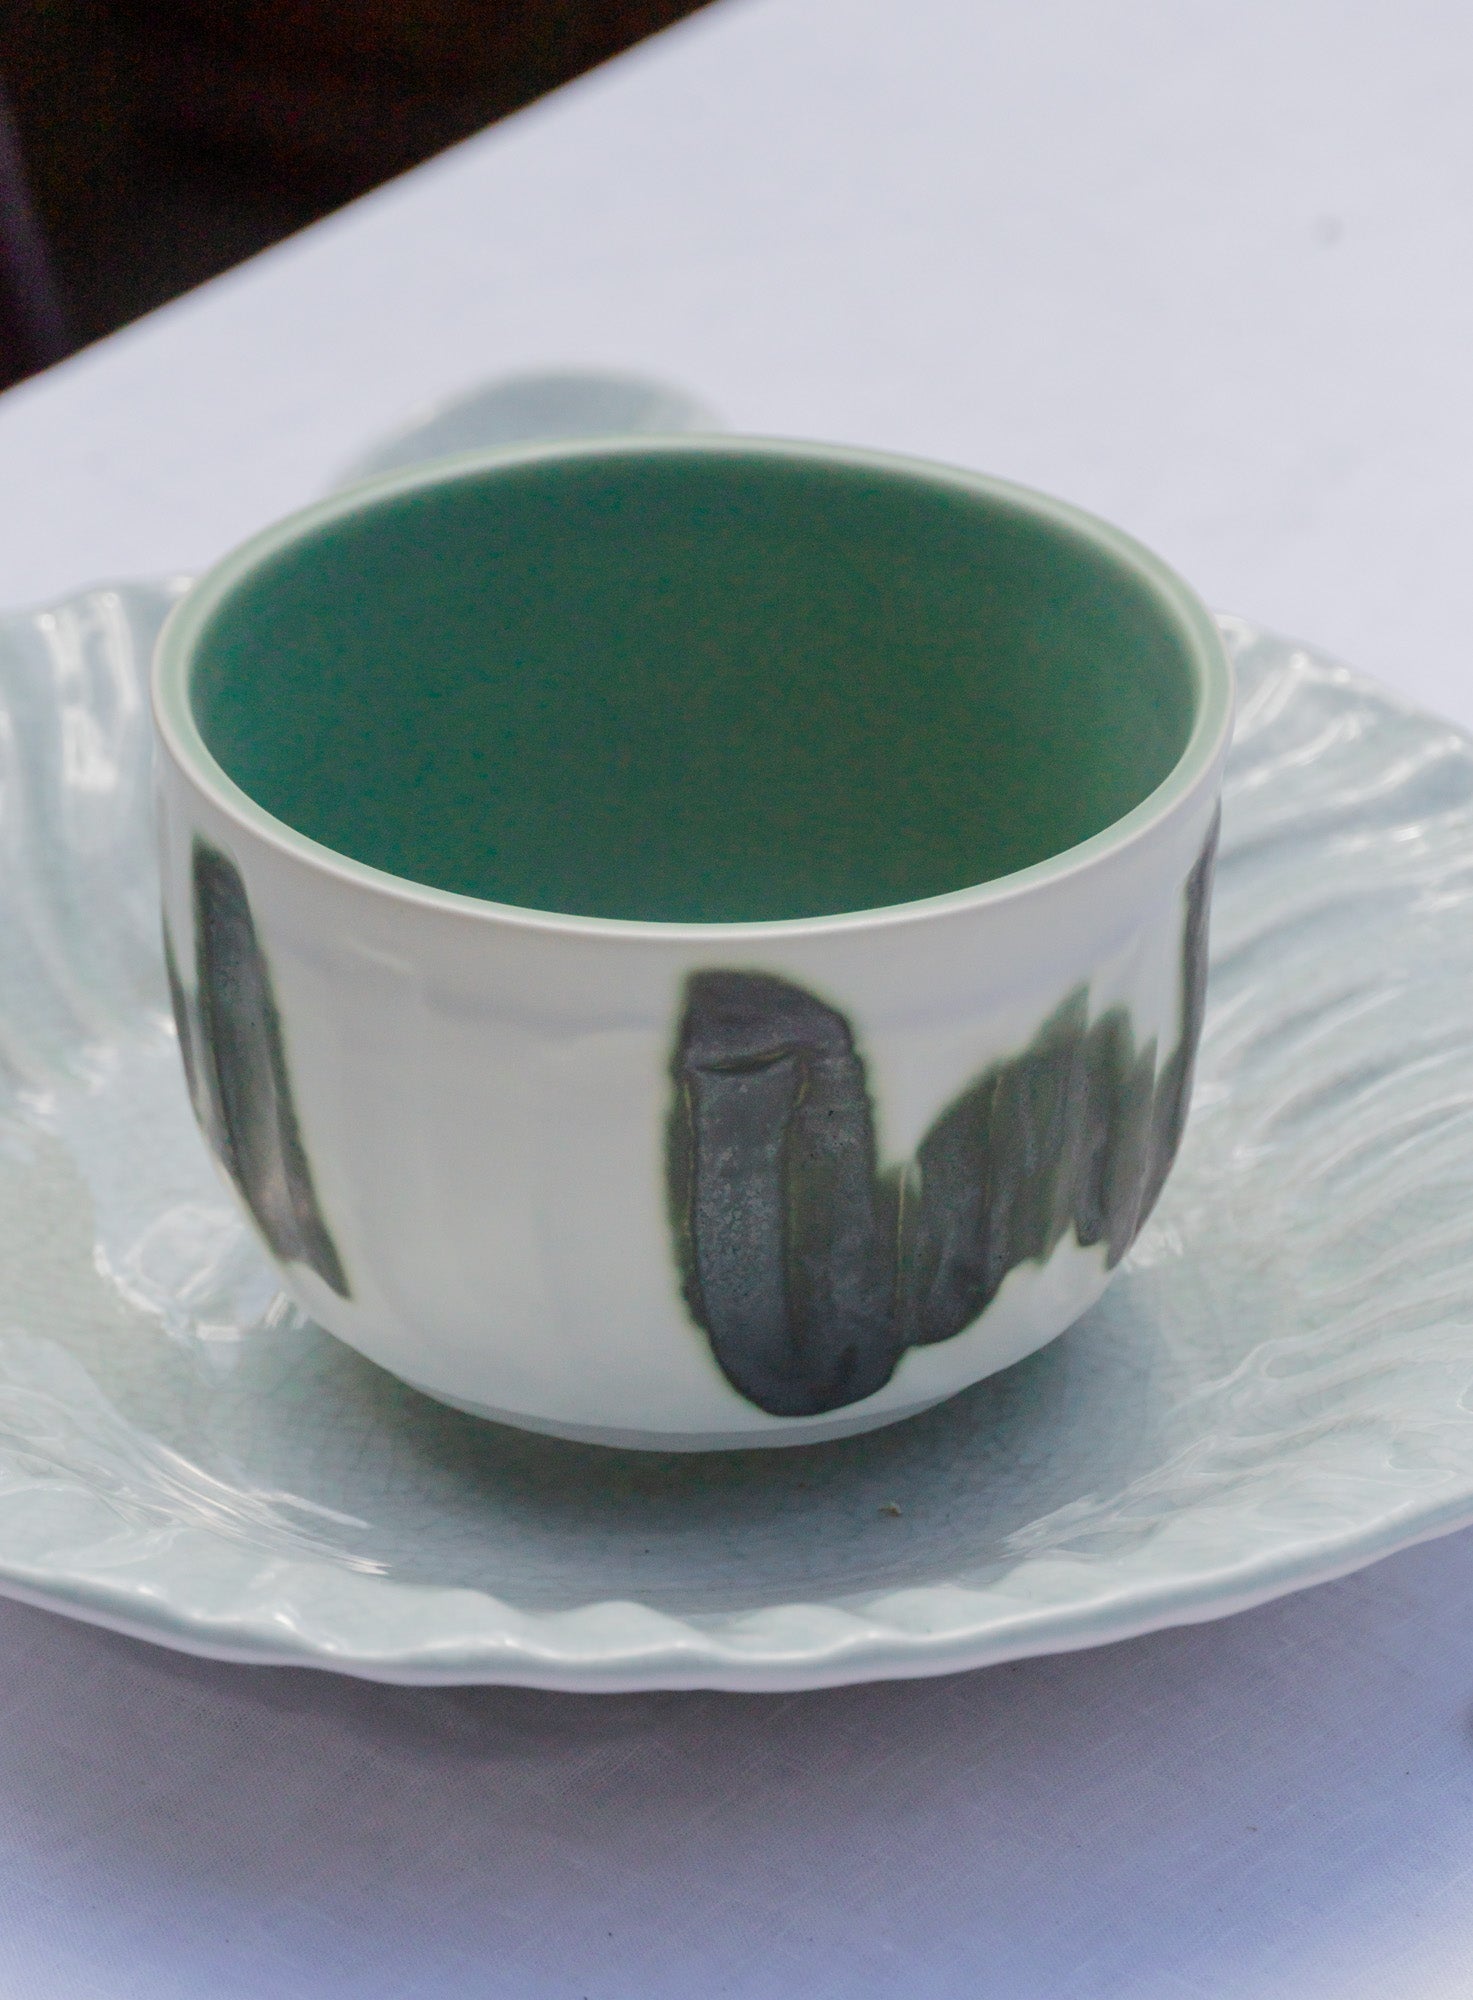 Dashi Bowl Green on plate by Jars Ceramistes.